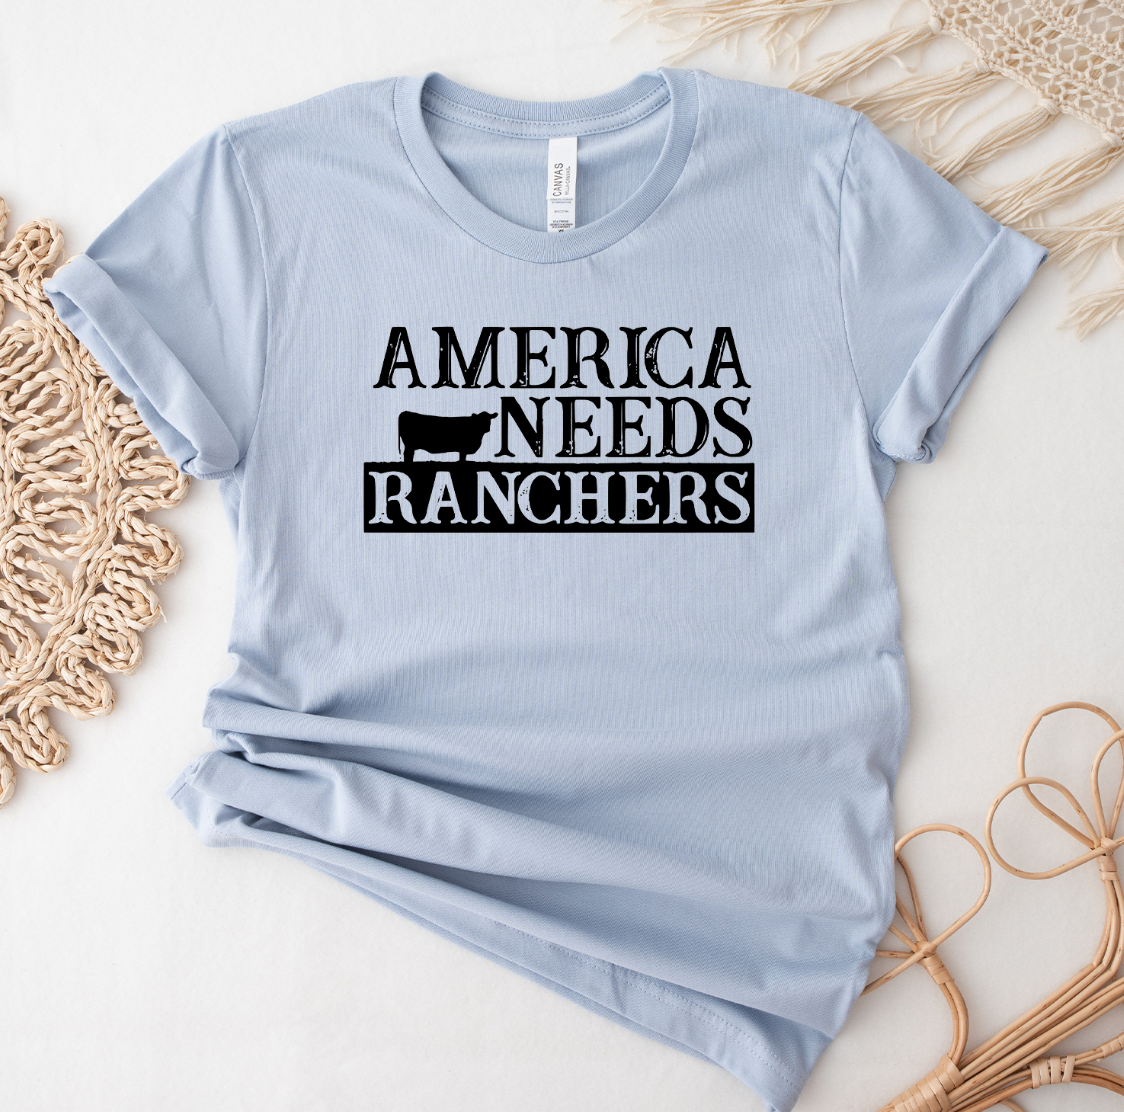 America Needs Ranchers T-Shirt (XS-4XL) - Multiple Colors!